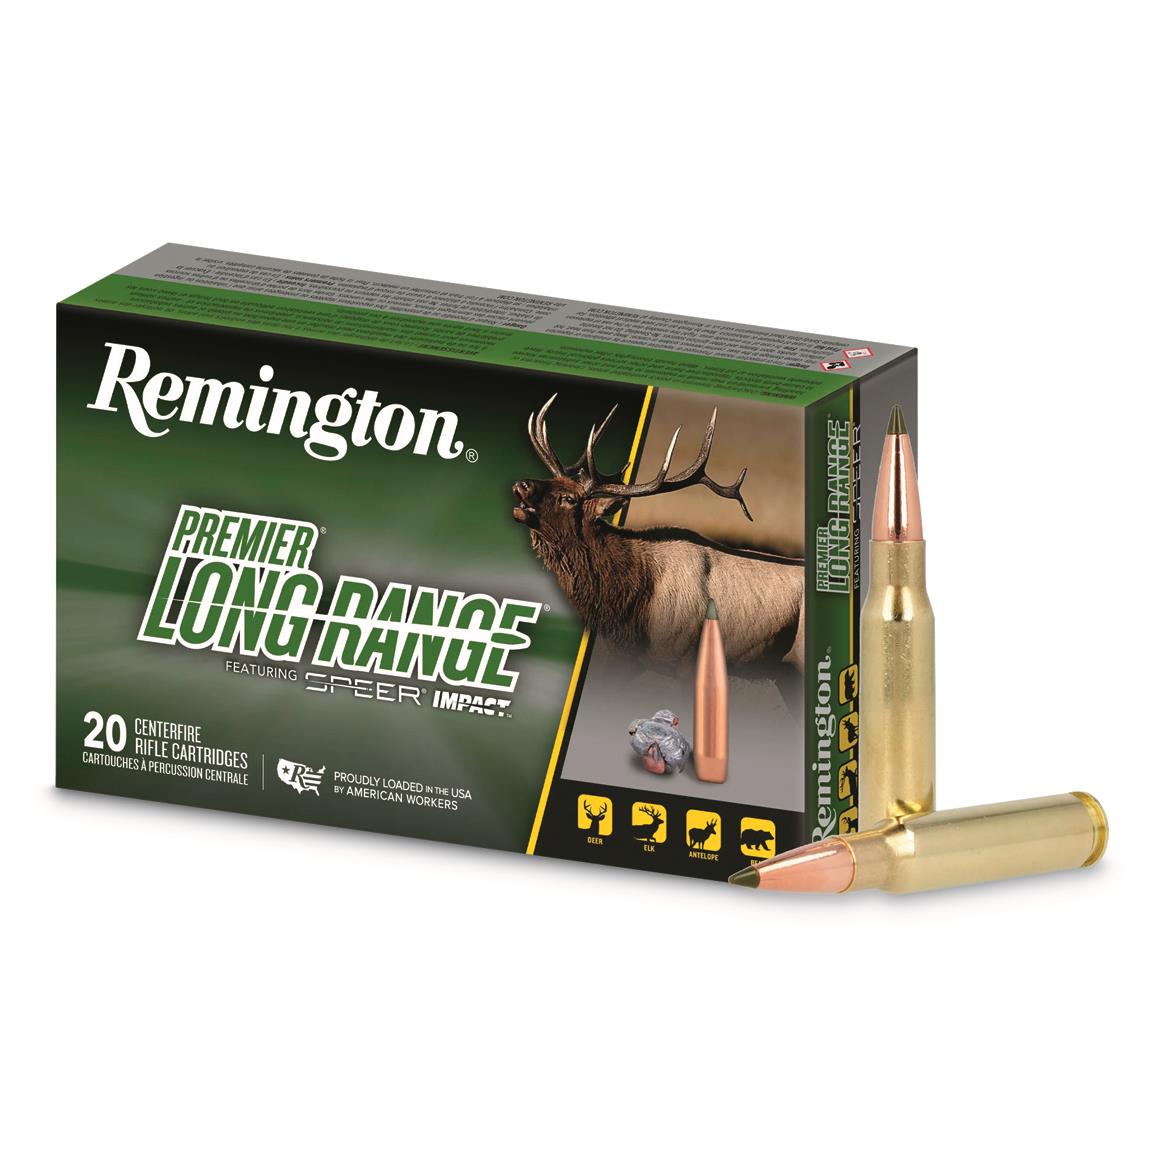 Remington Premier Long Range, .308 Win., Speer Impact, 172 Grain, 20 Rounds